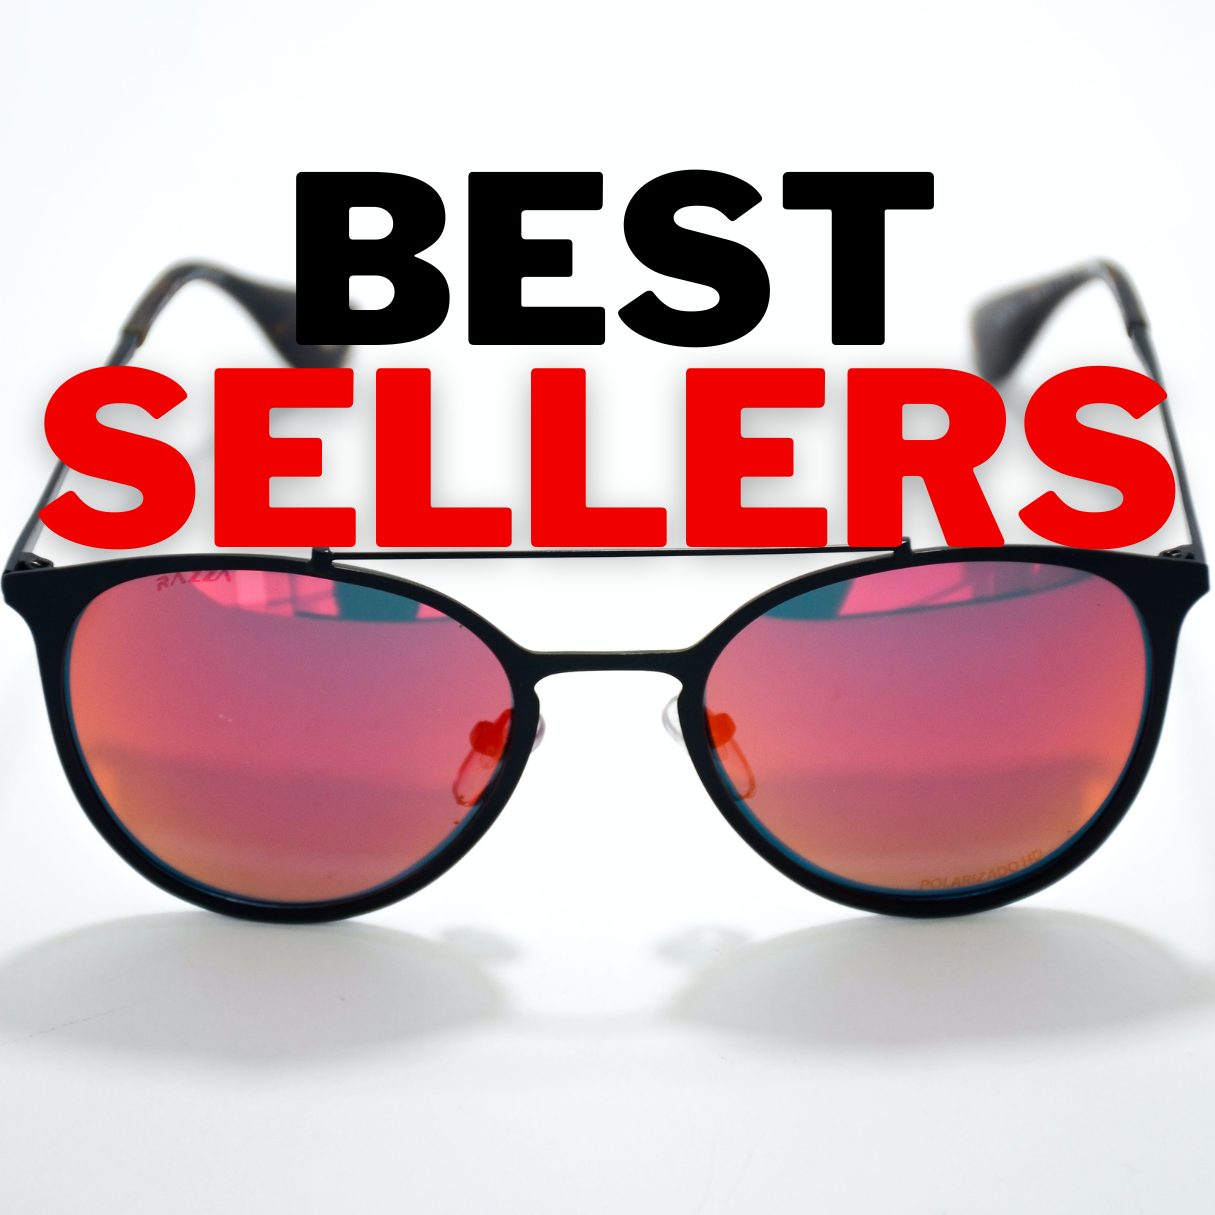 Best Selling Sunglasses